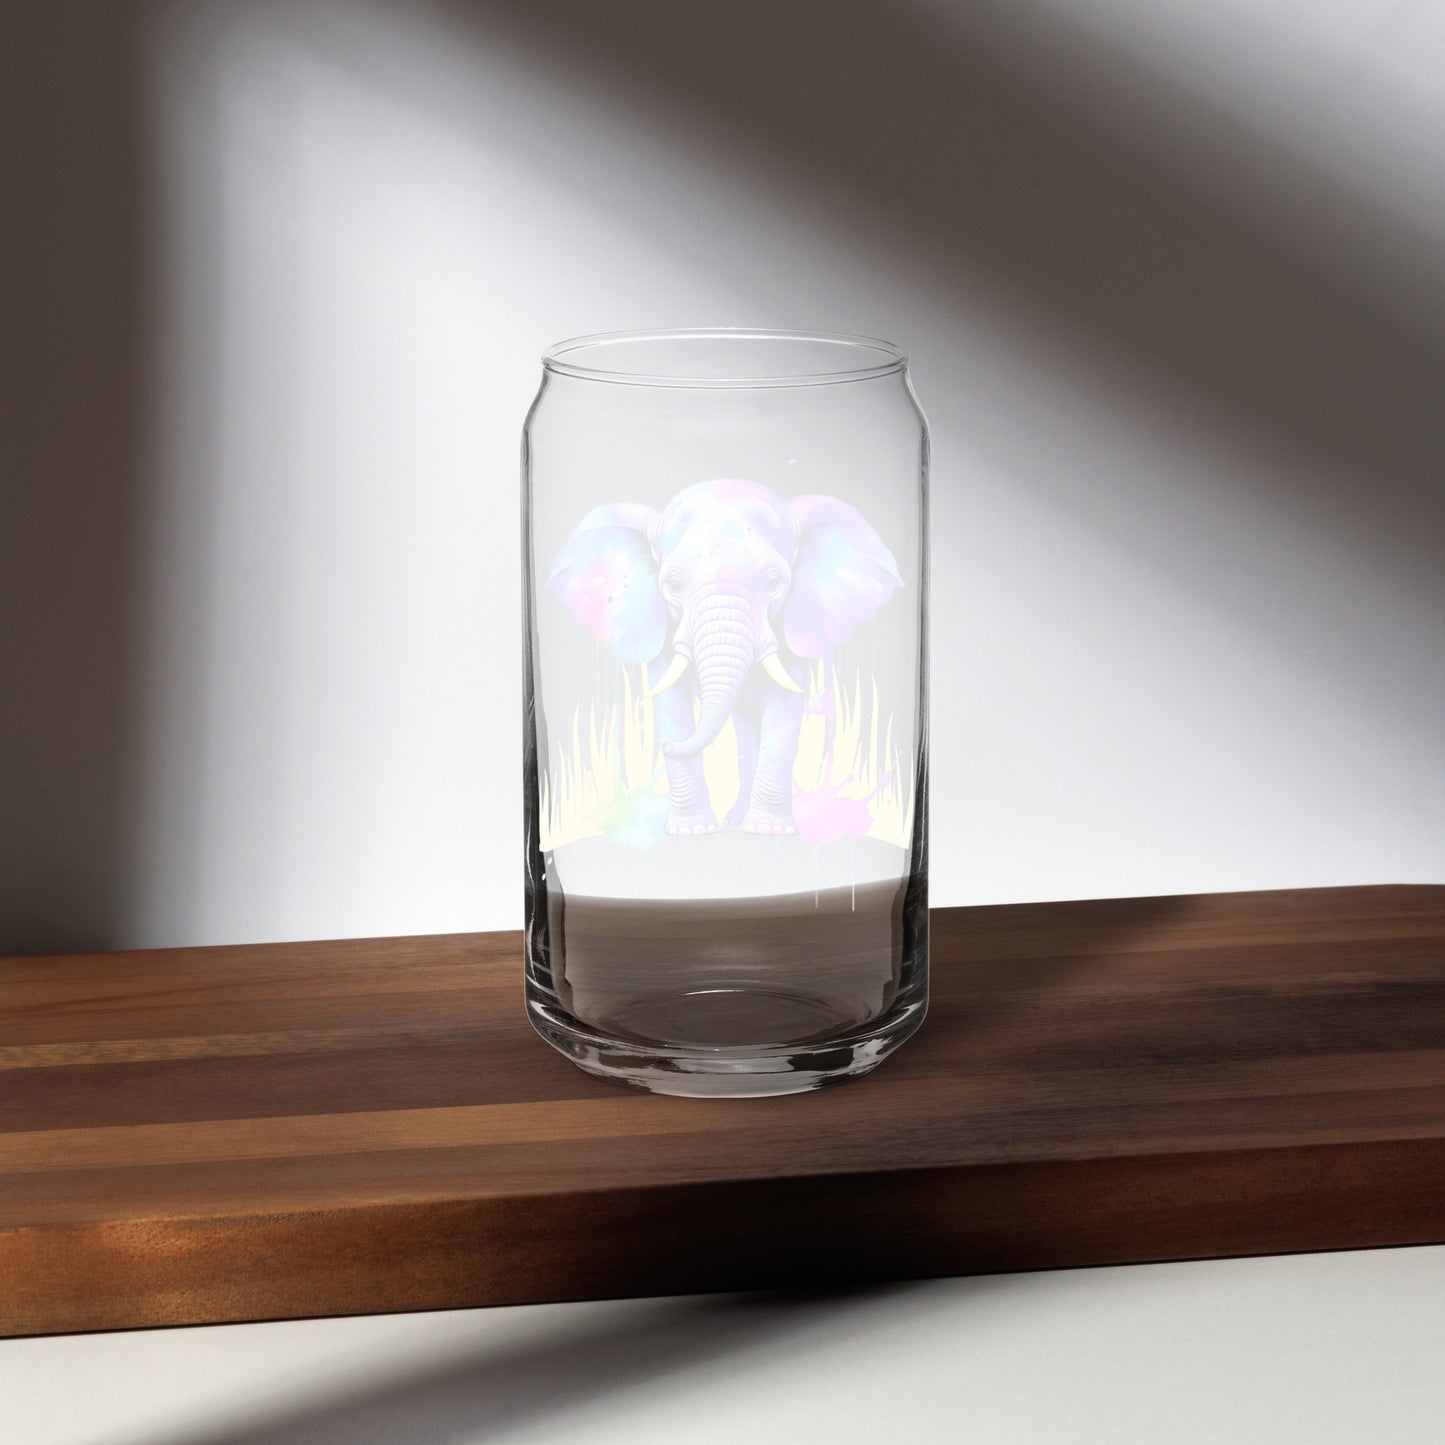 Vibrant Elephant Can-shaped glass